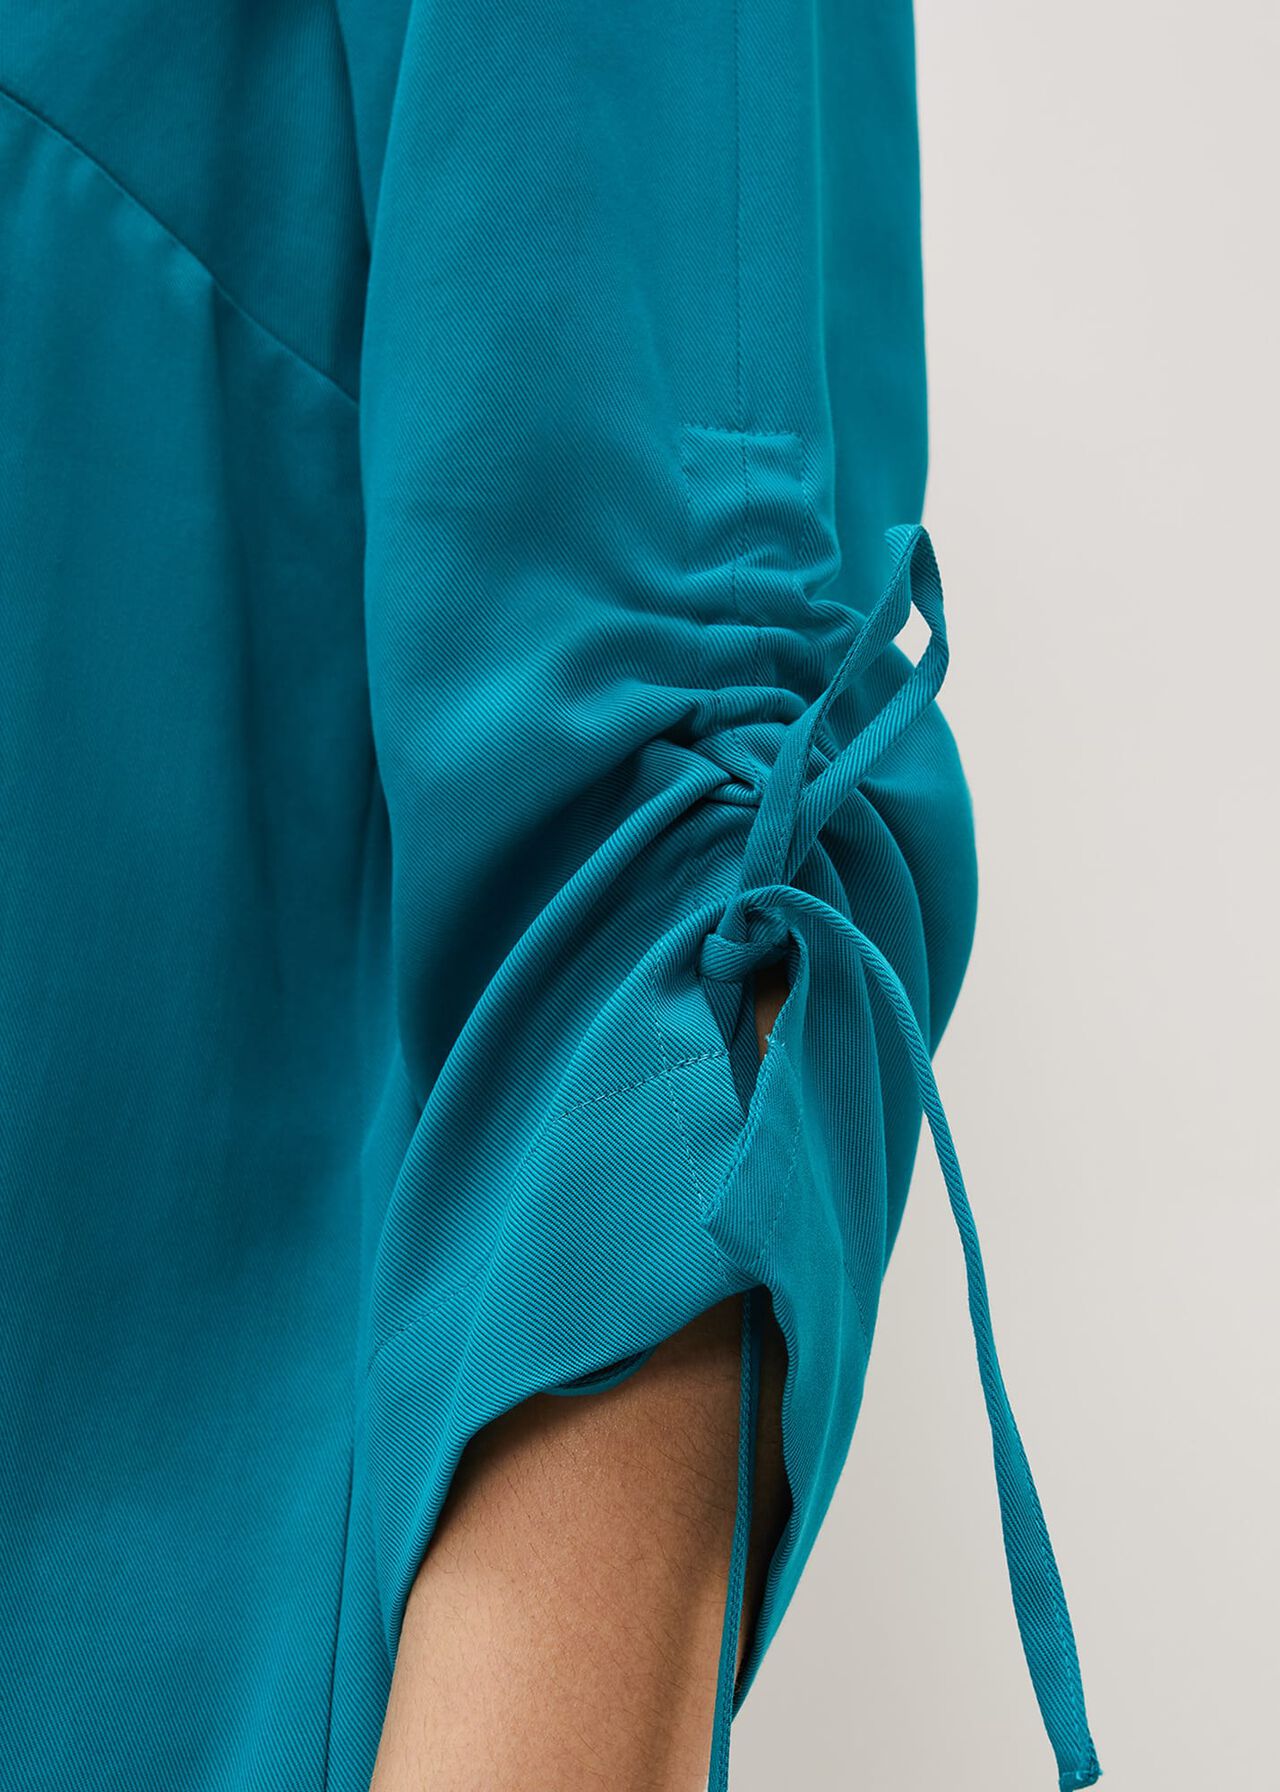 Ceiara Ruched Sleeve Tunic Dress